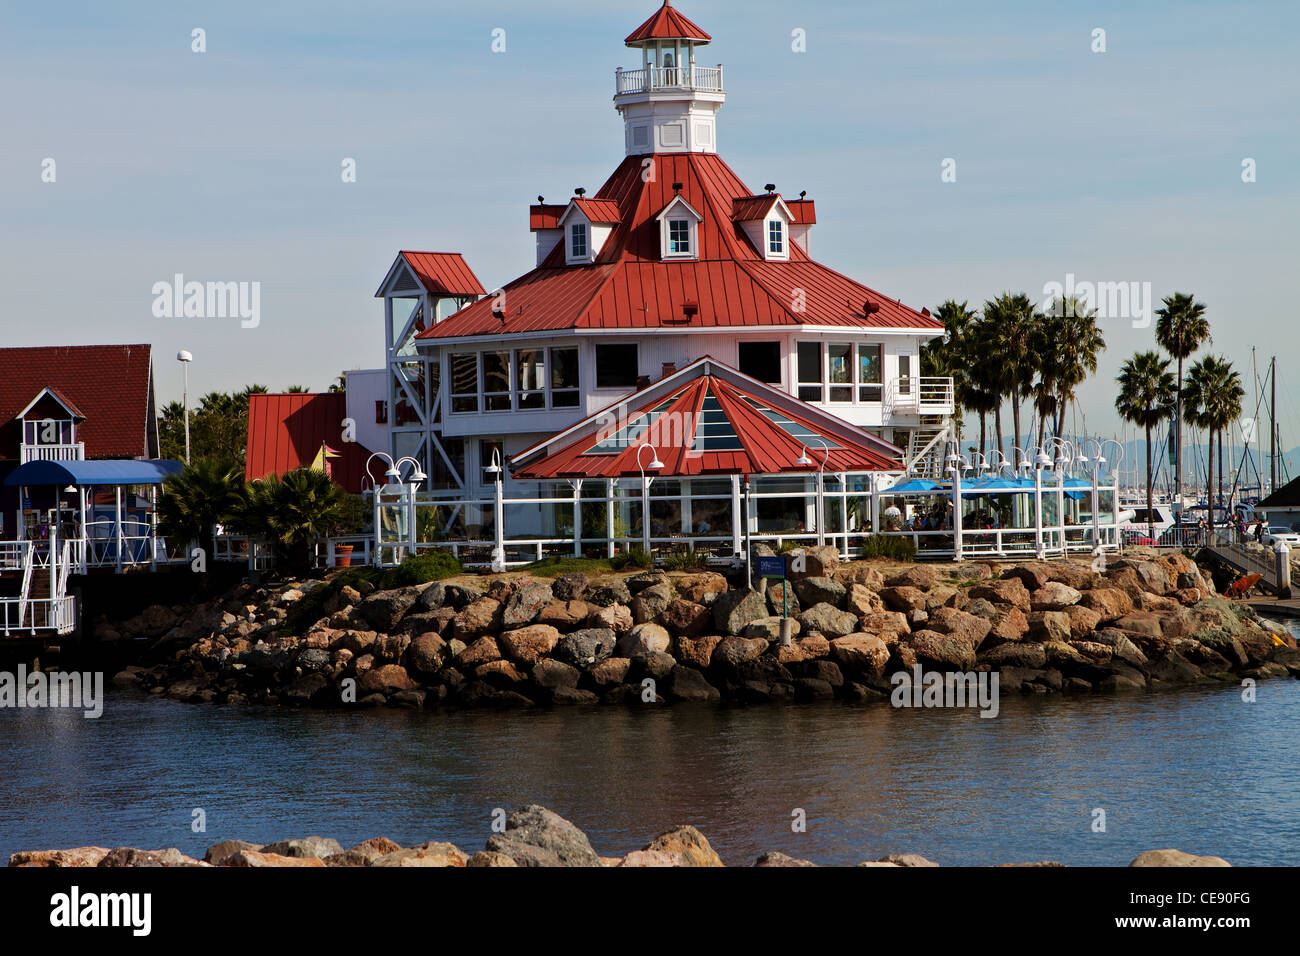 Parkers lighthouse restaurant shoreline village Long Beach California Stock Photo